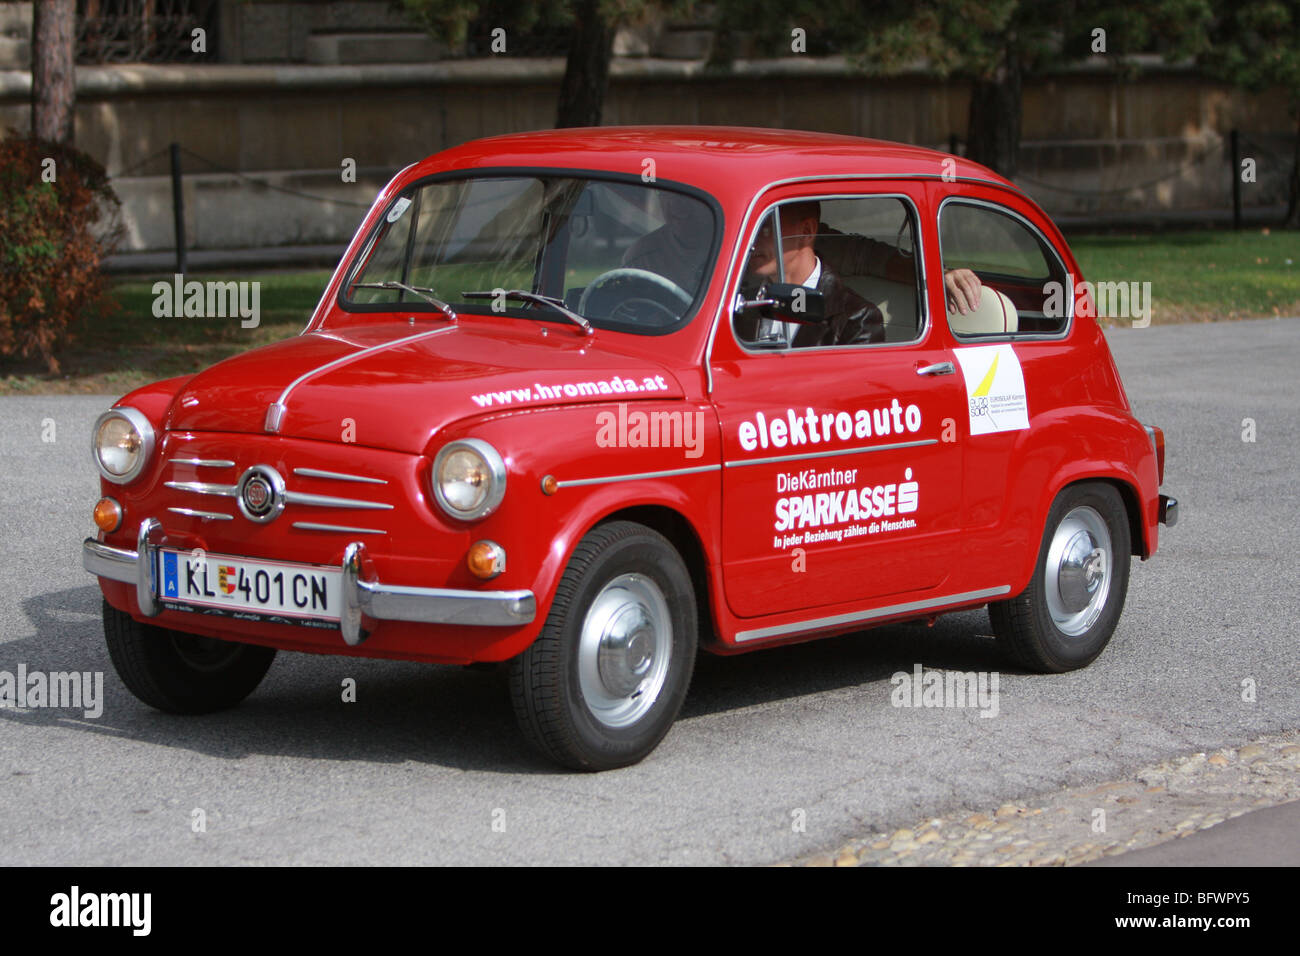 Electric car with zero emissions in Vienna, Austria Stock Photo